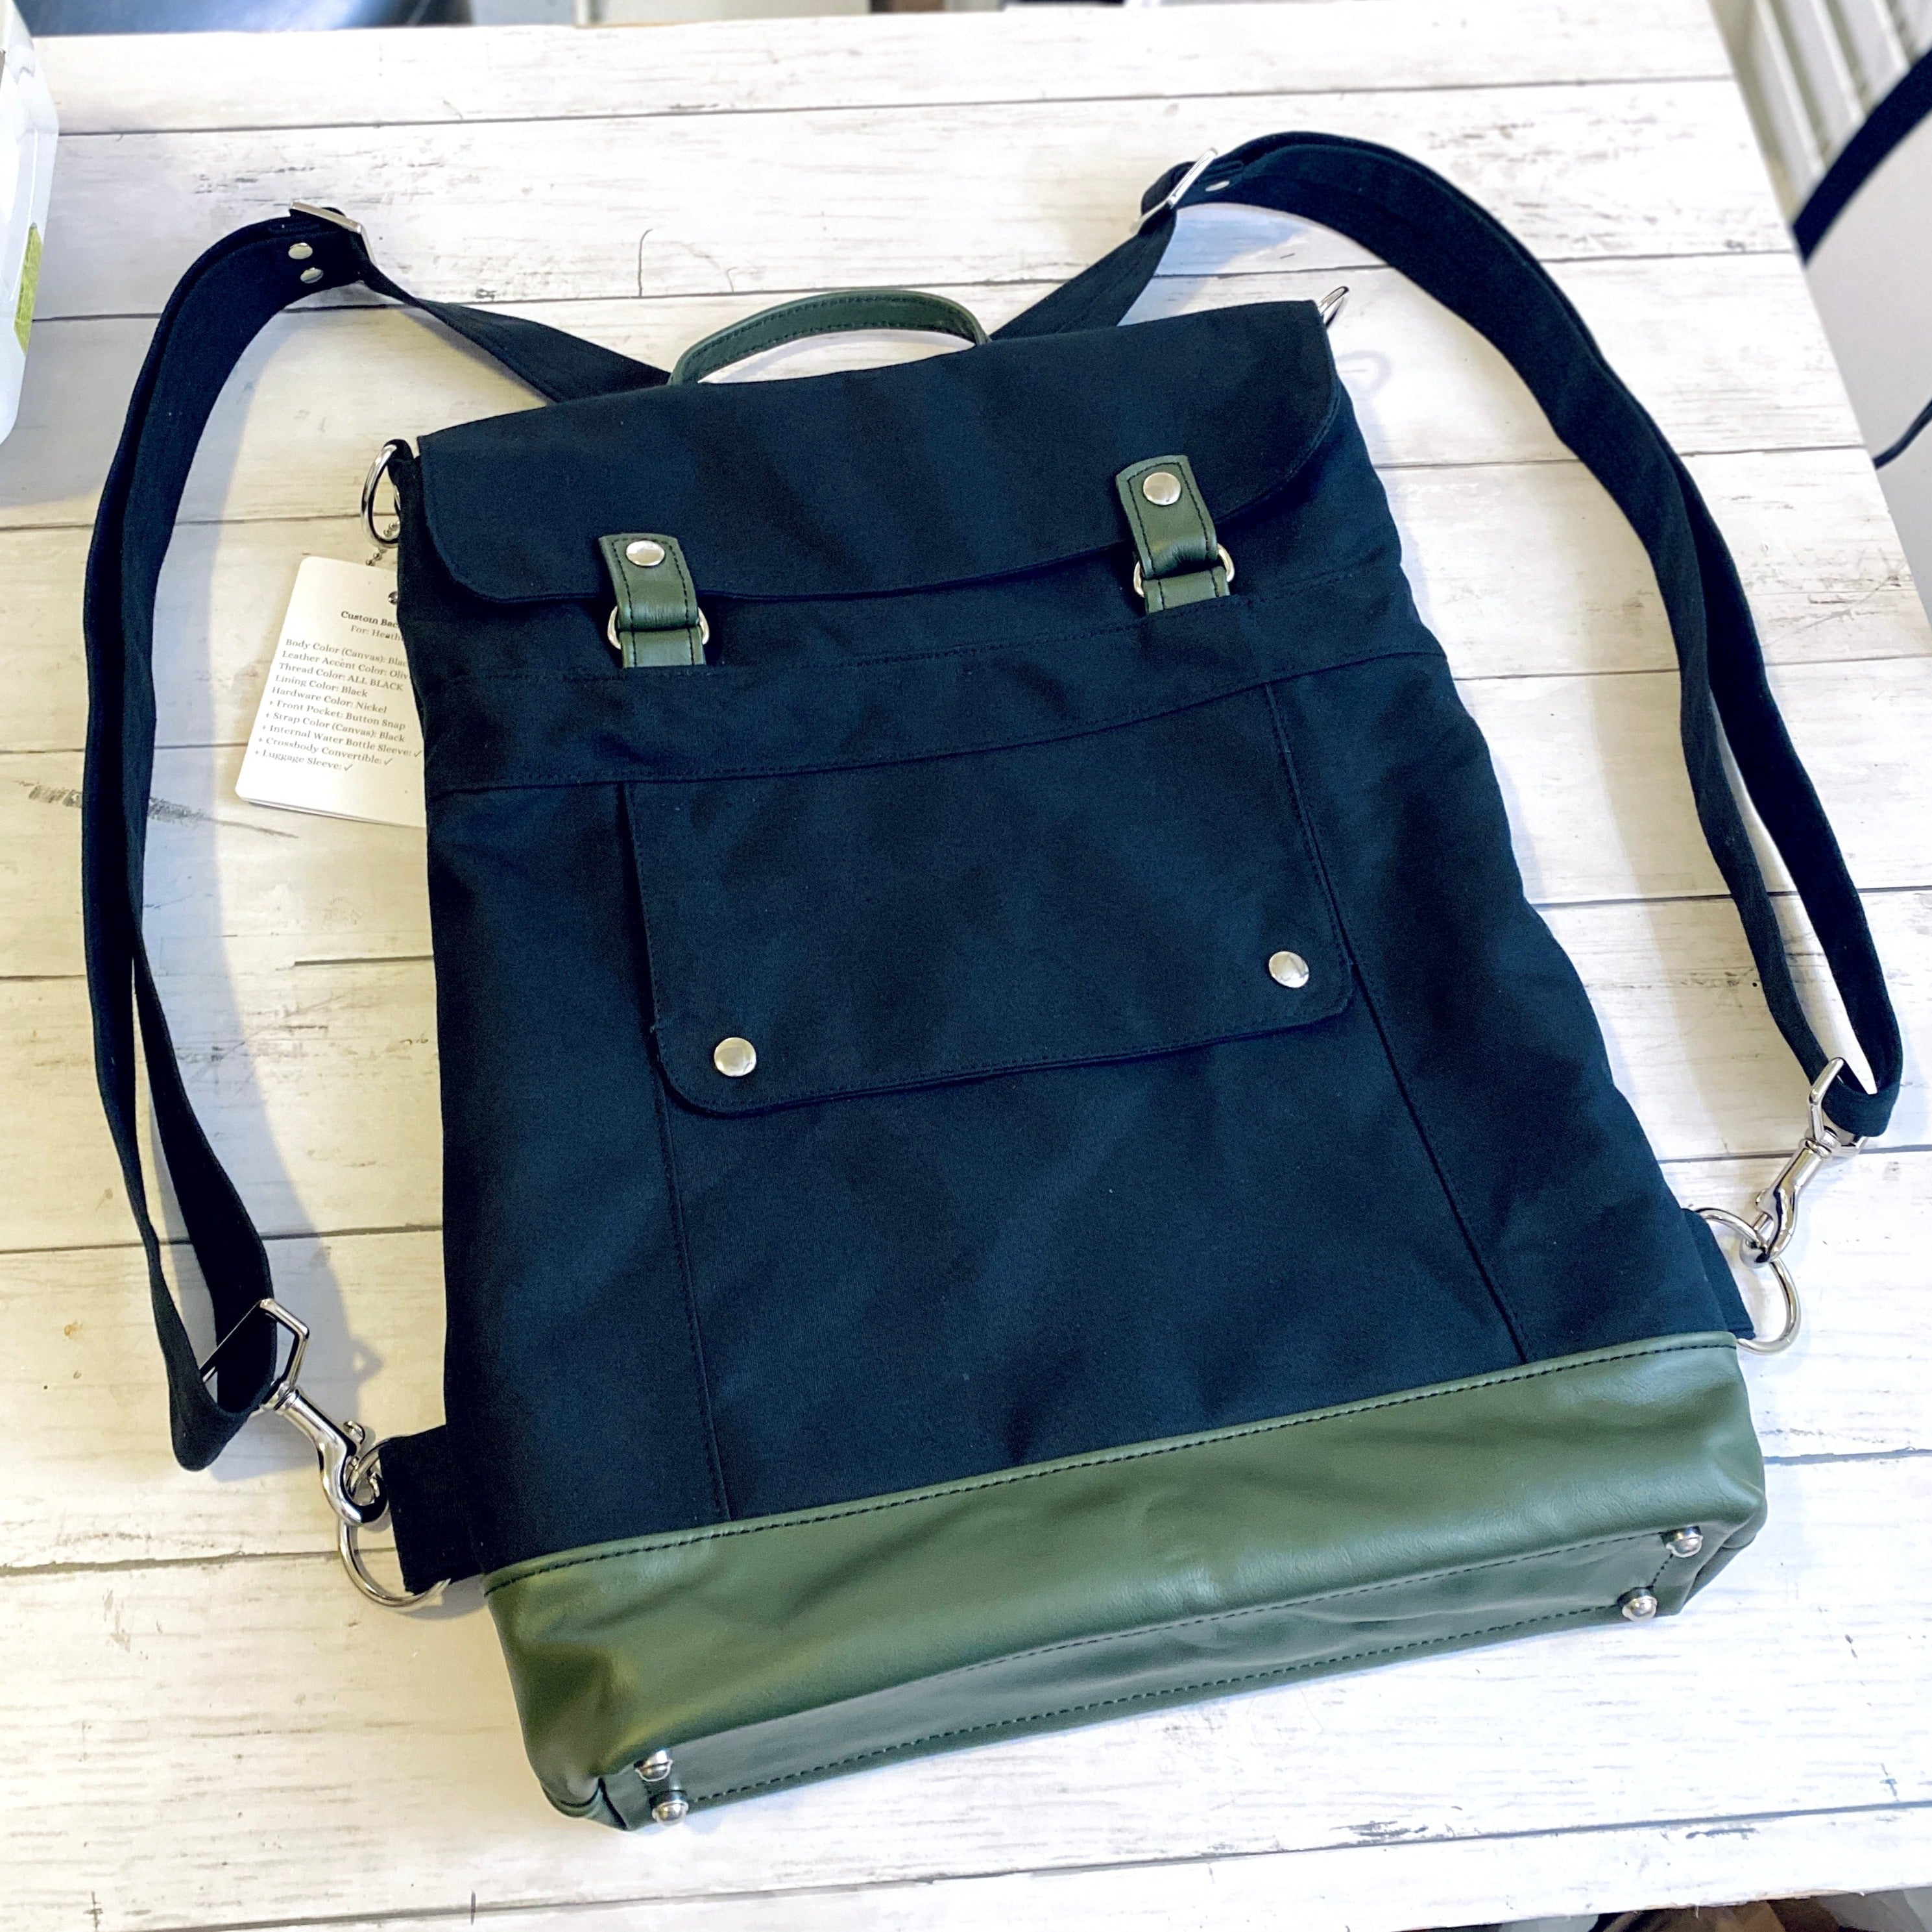 Backpack in Black Canvas, Olive